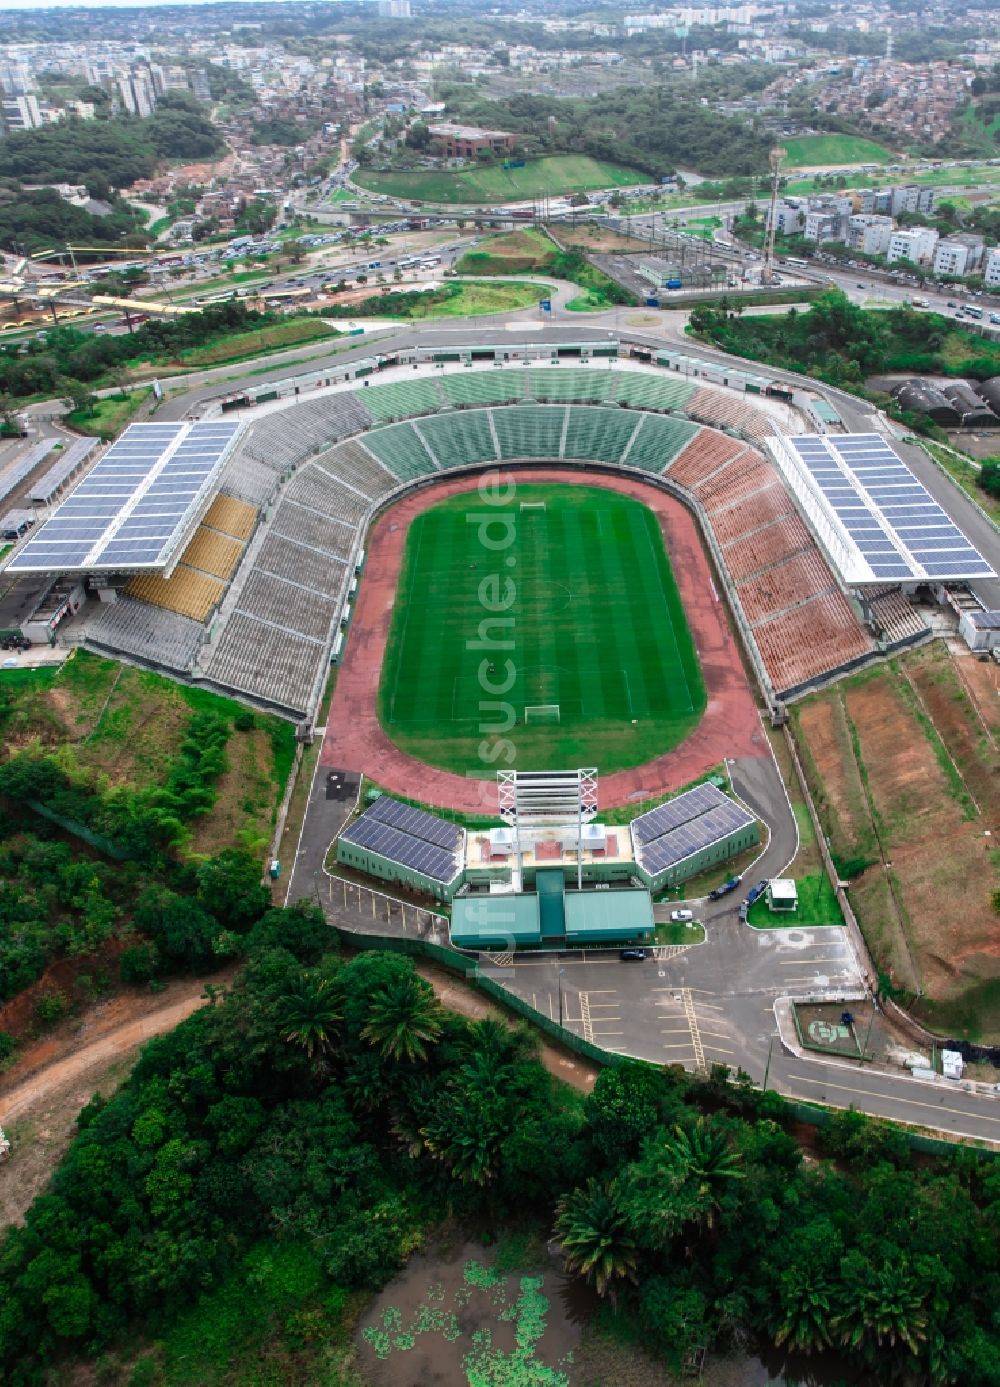 Salvador von oben - Stadion der Arena Estádio de Pituacu in Salvador in der Provinz Bahia in Brasilien